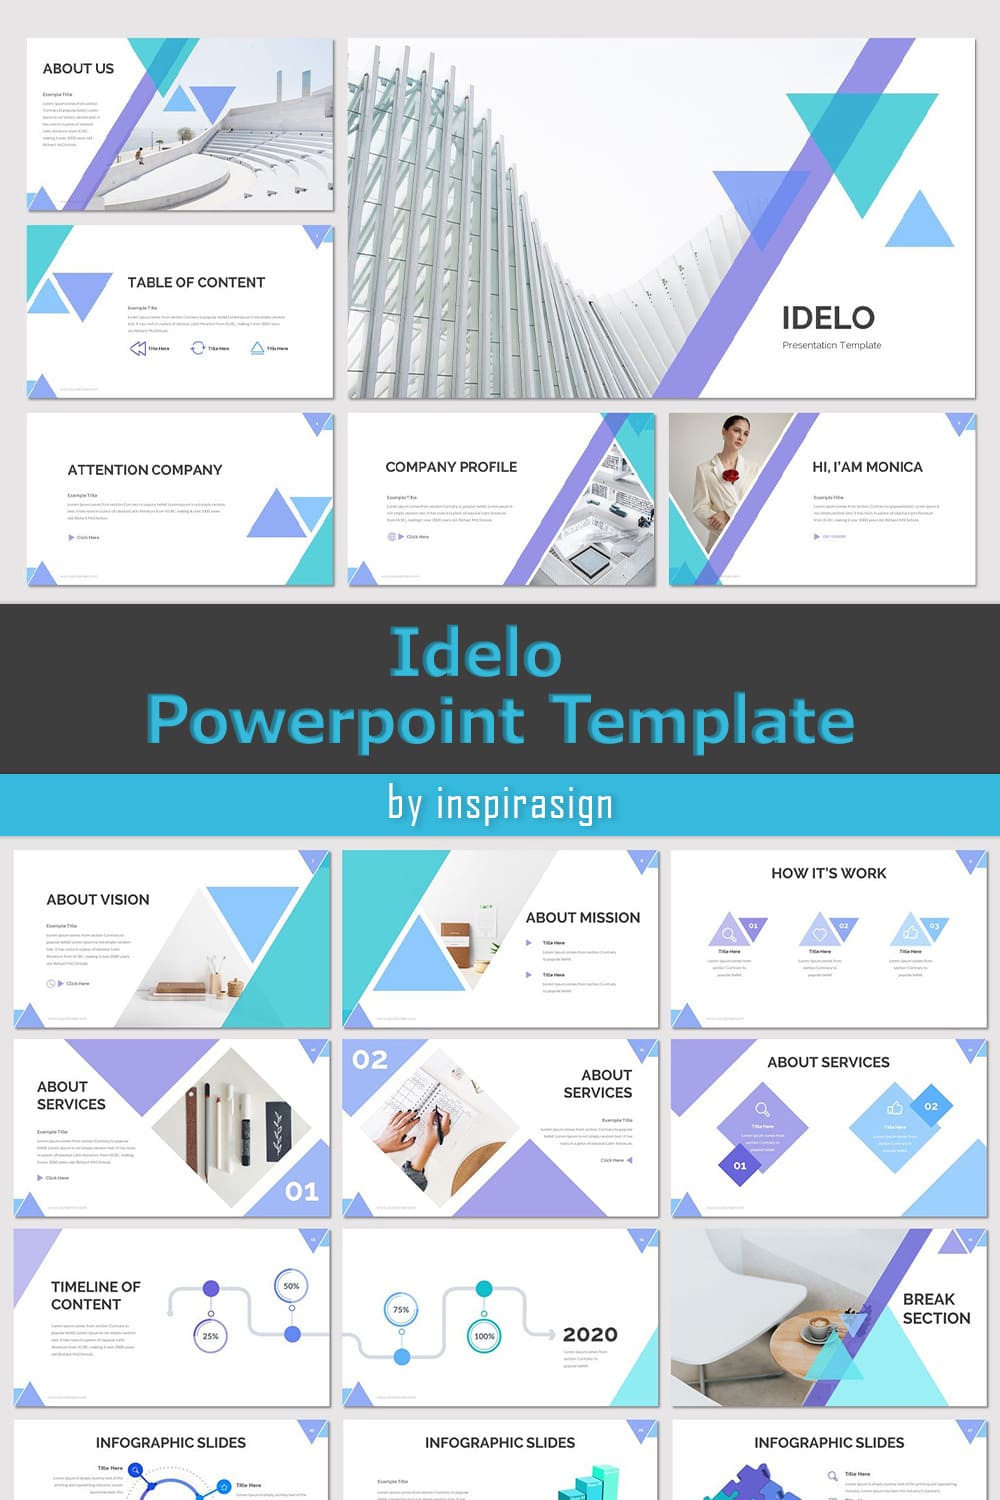 Idelo - PowerPoint Template pinterest image.